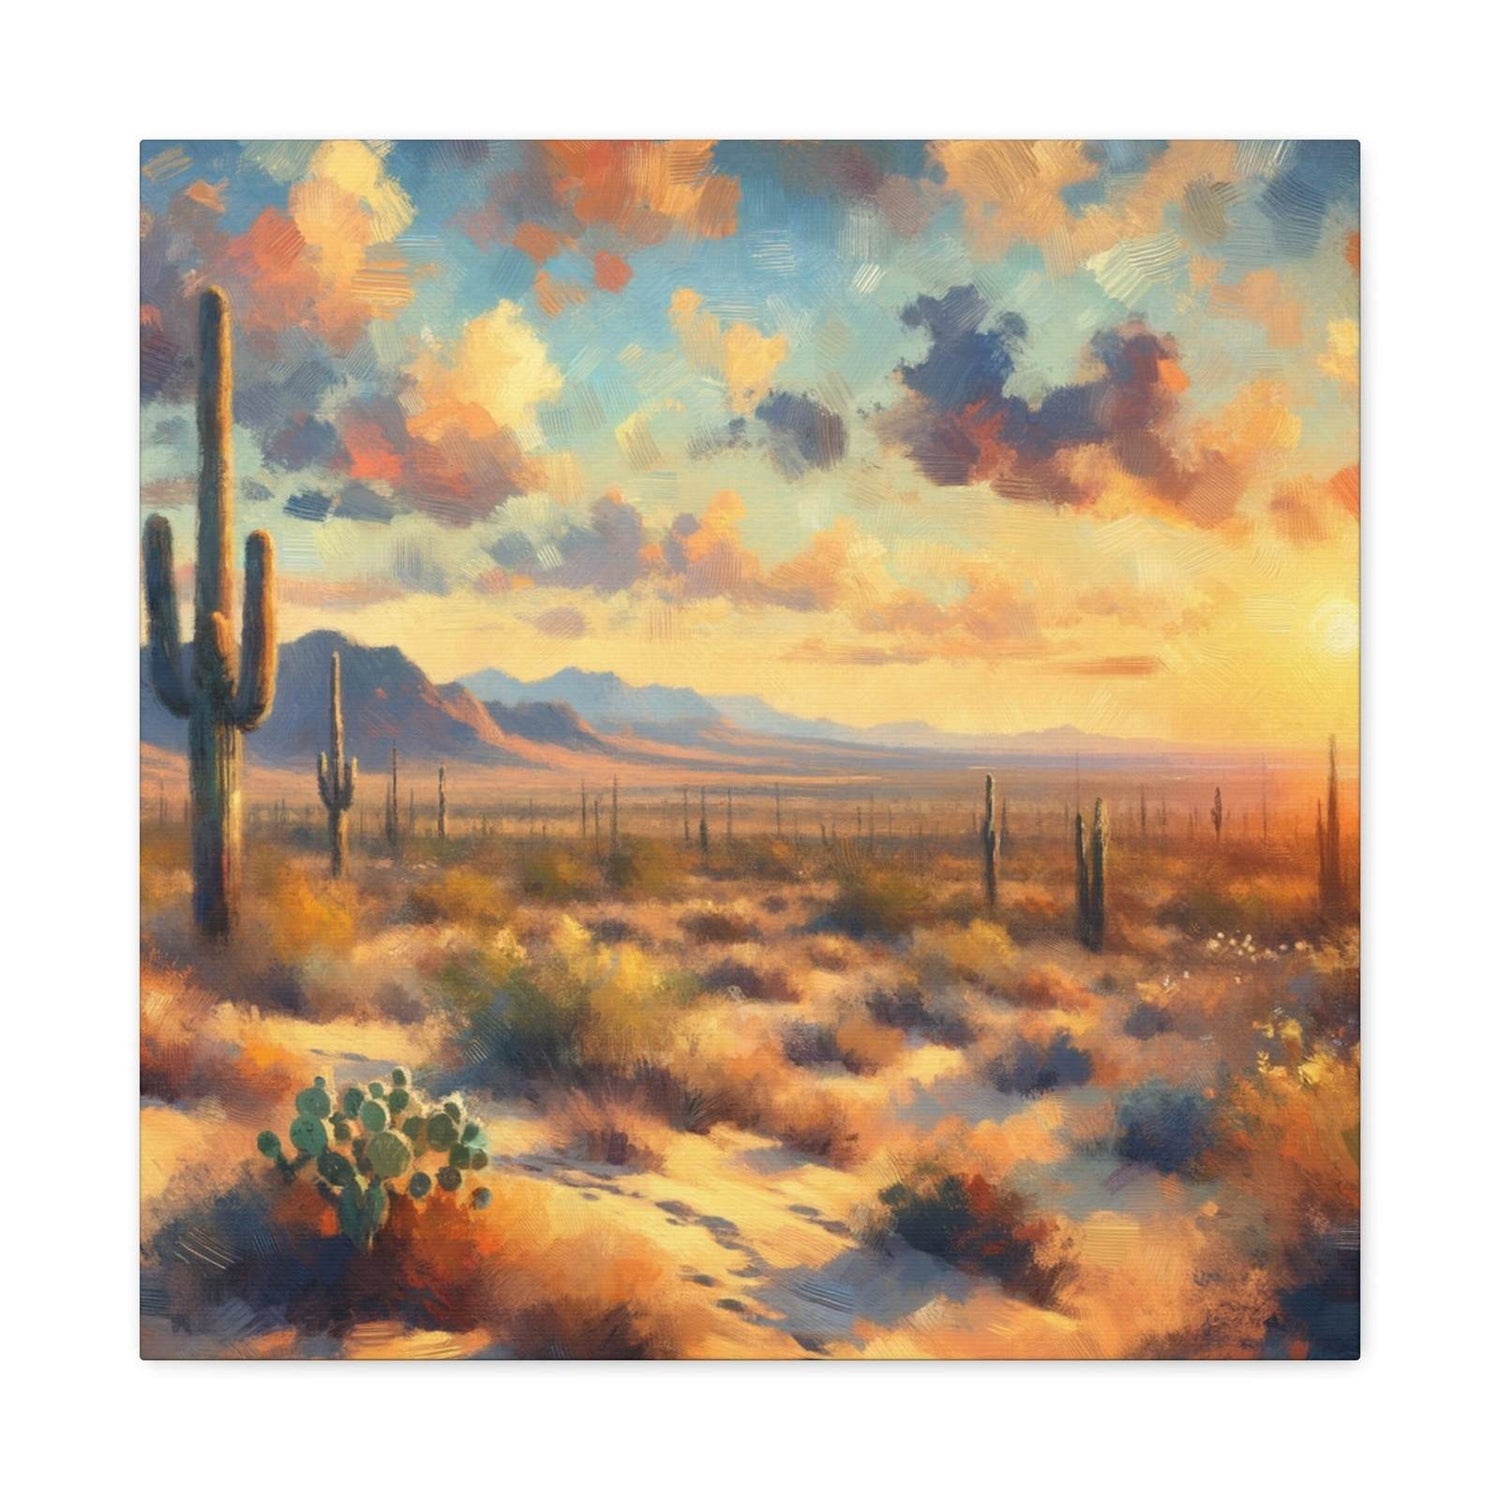 Desert Echoes: Southwestern Art Collection